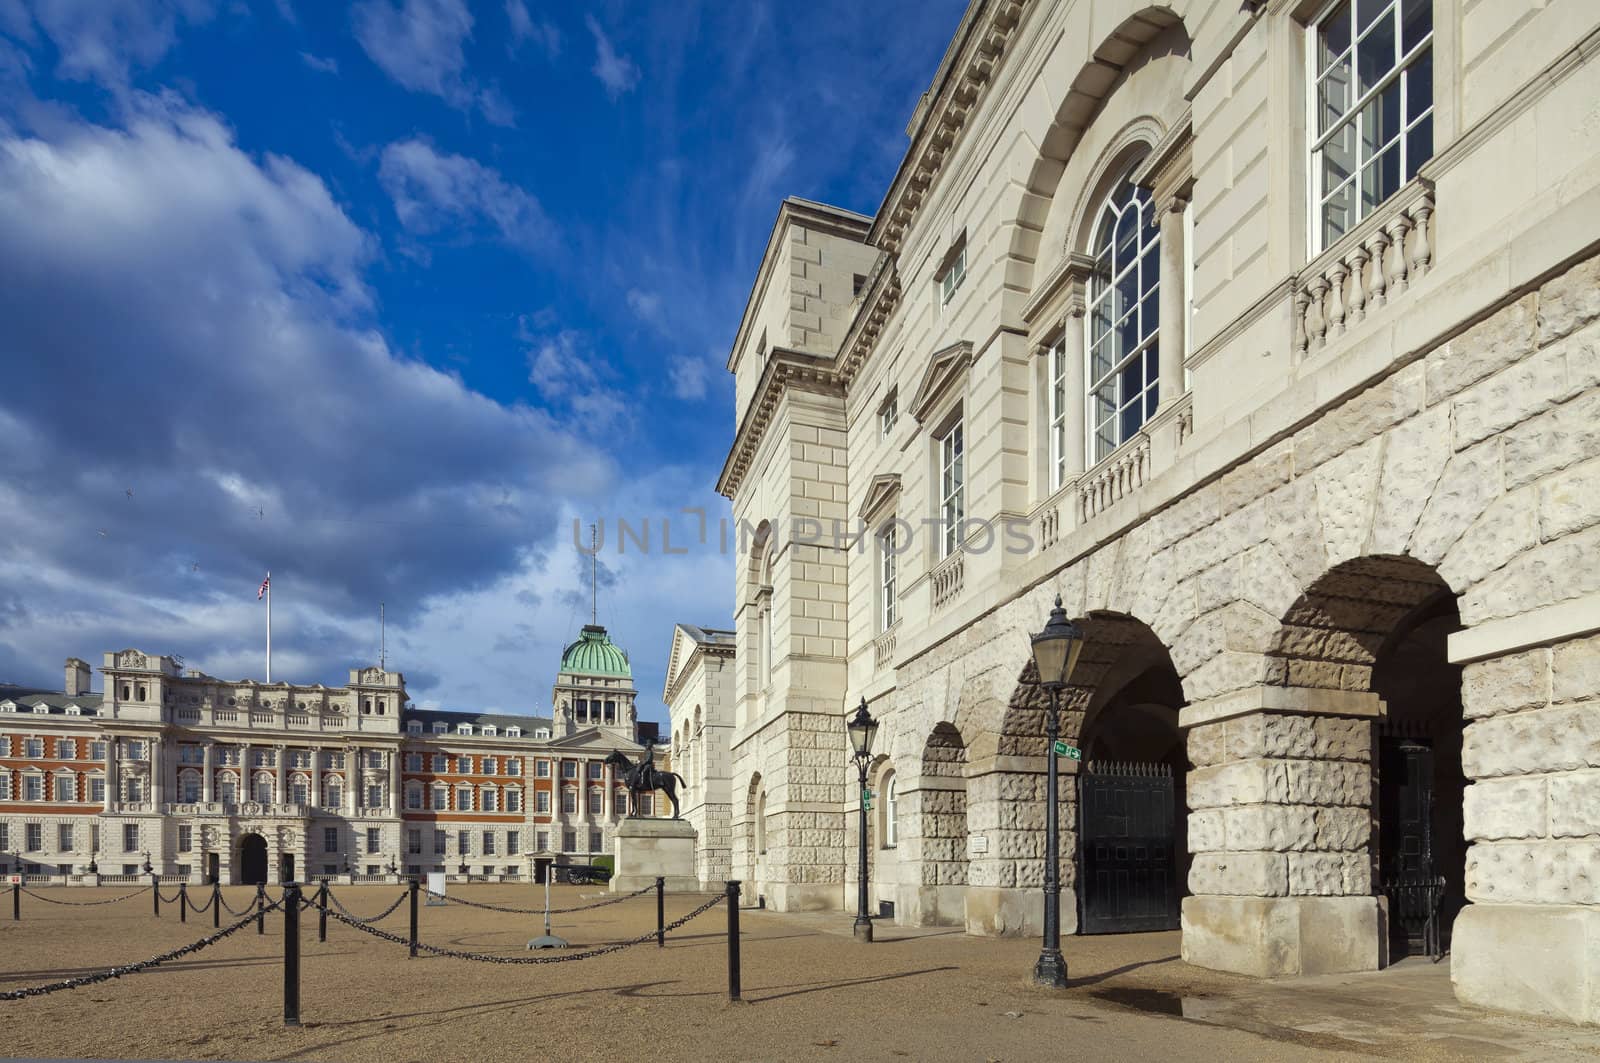  Horse Guards Parade buildings, London, UK by Antartis